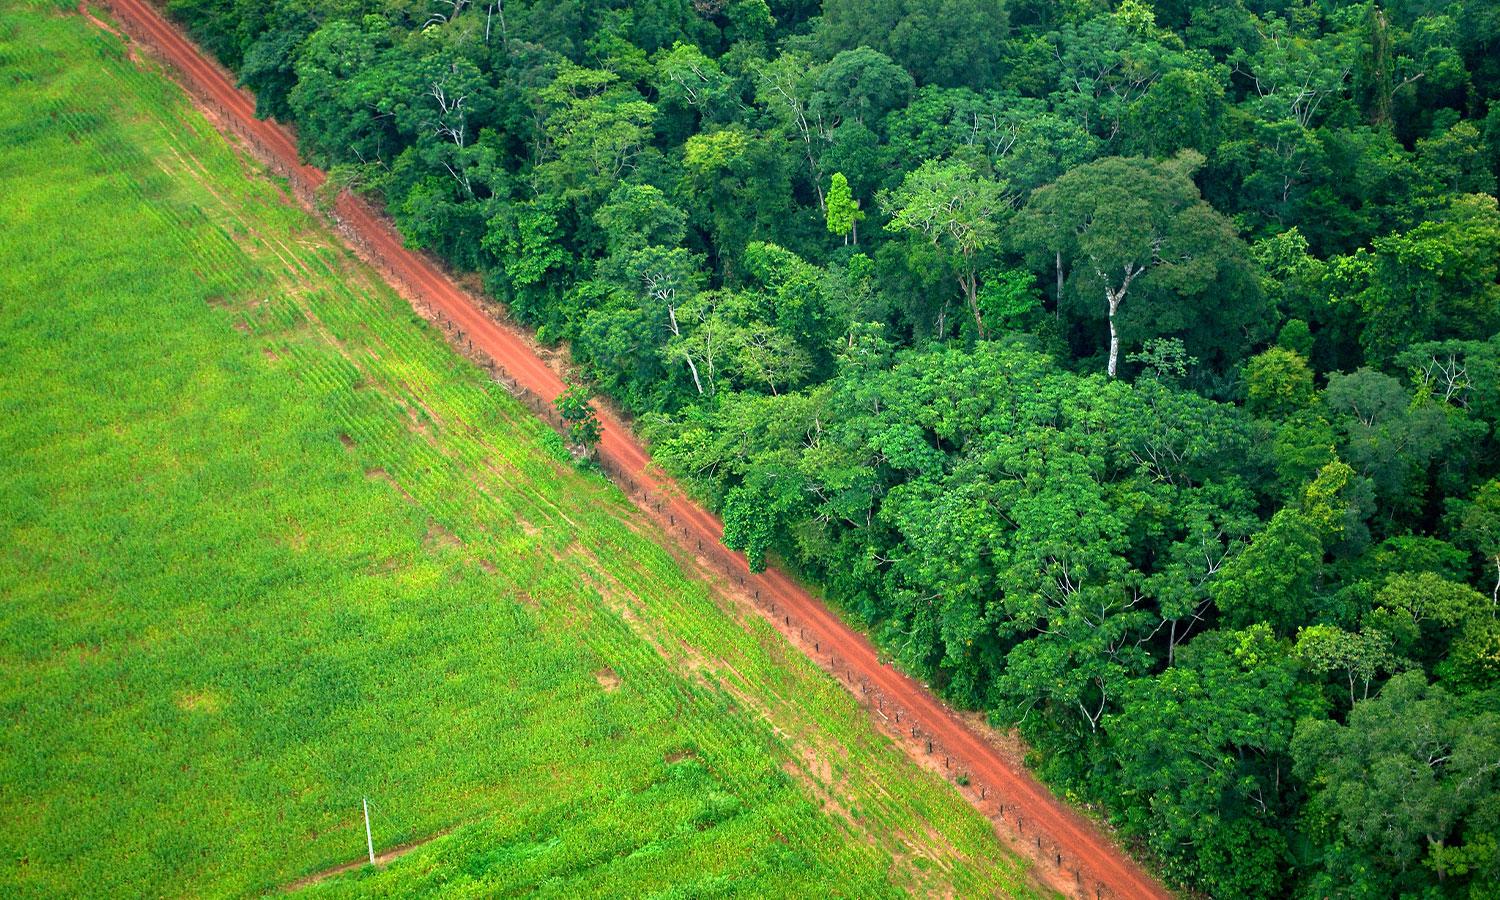 Deforestation and forest degradation - resource